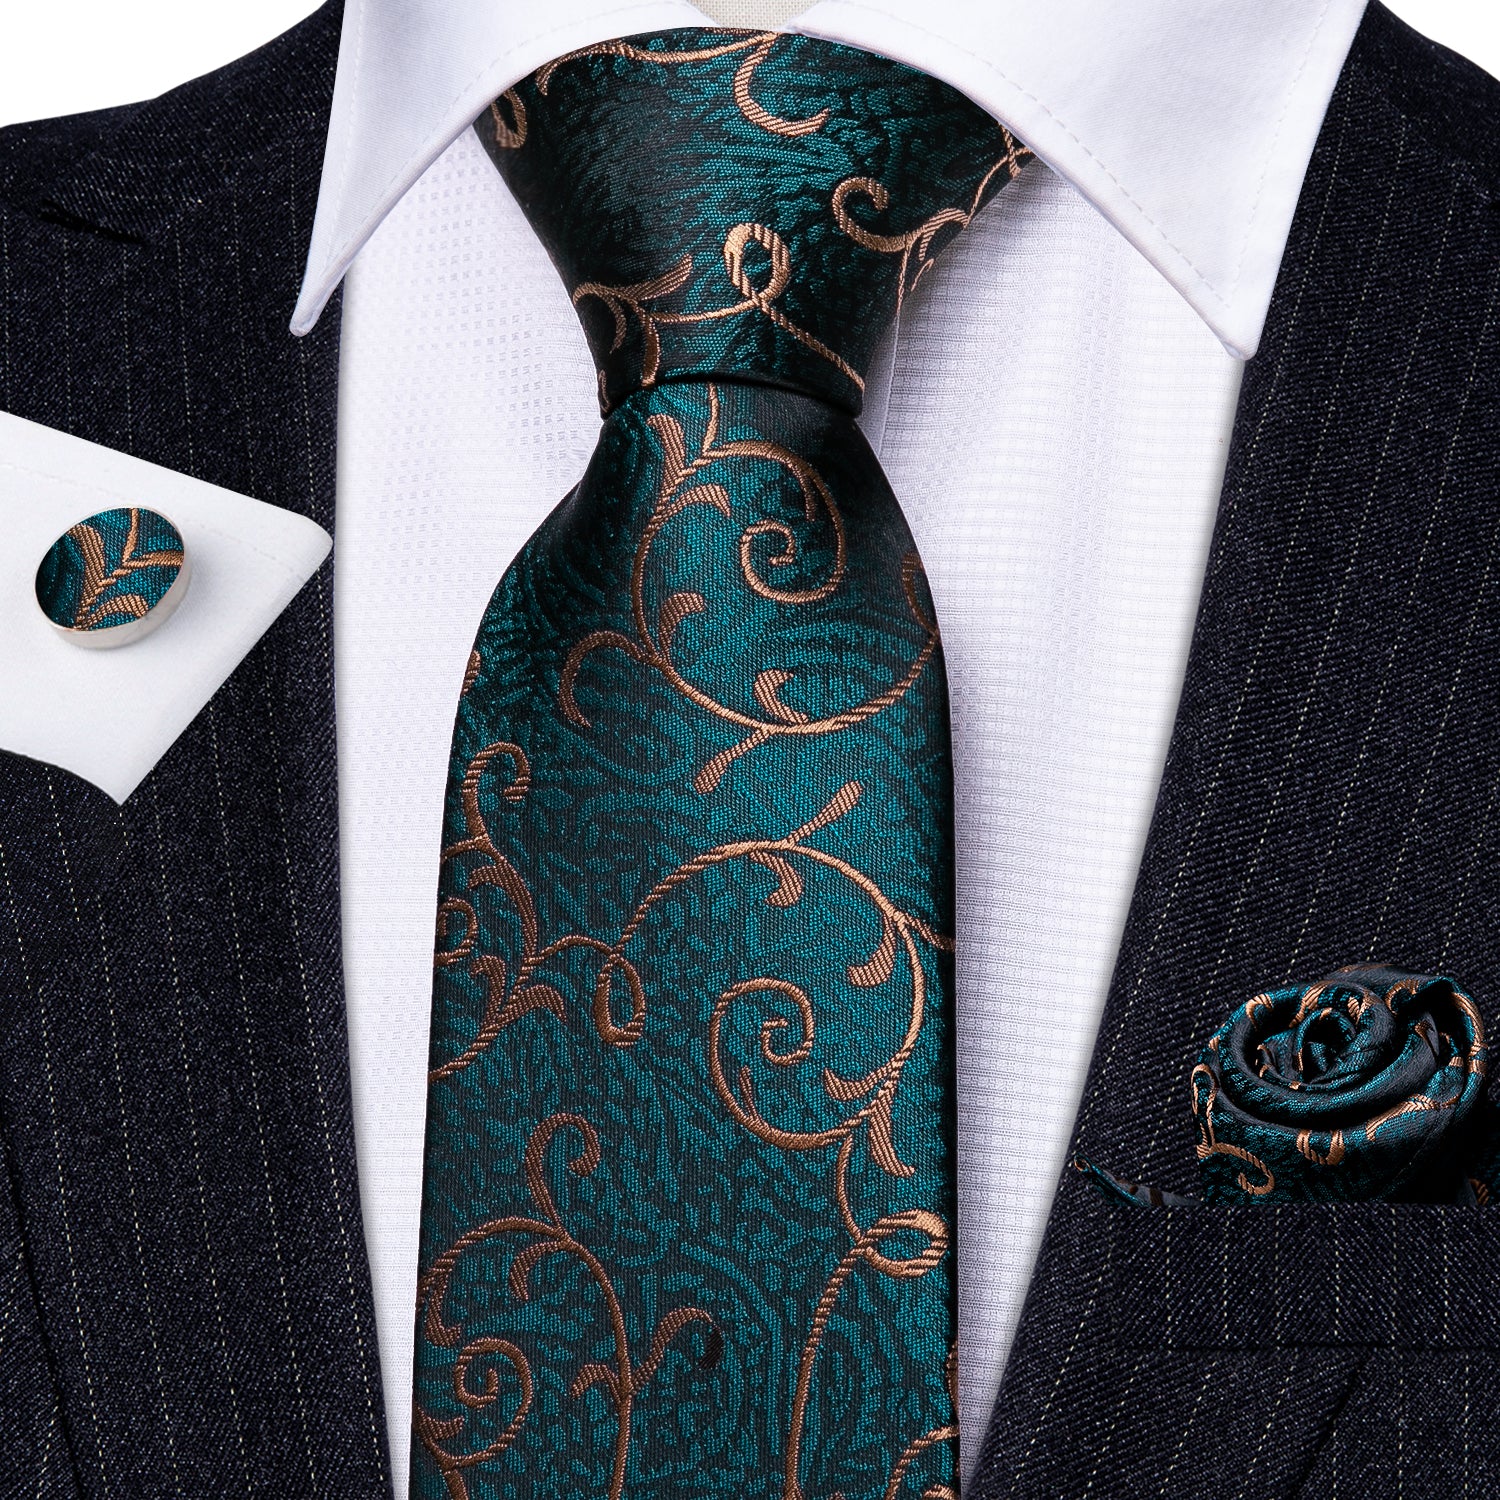 Barry Wang Green Tie Gold Paisley Silk Tie Hanky Cufflinks Tie Clip Set 4PC for Men